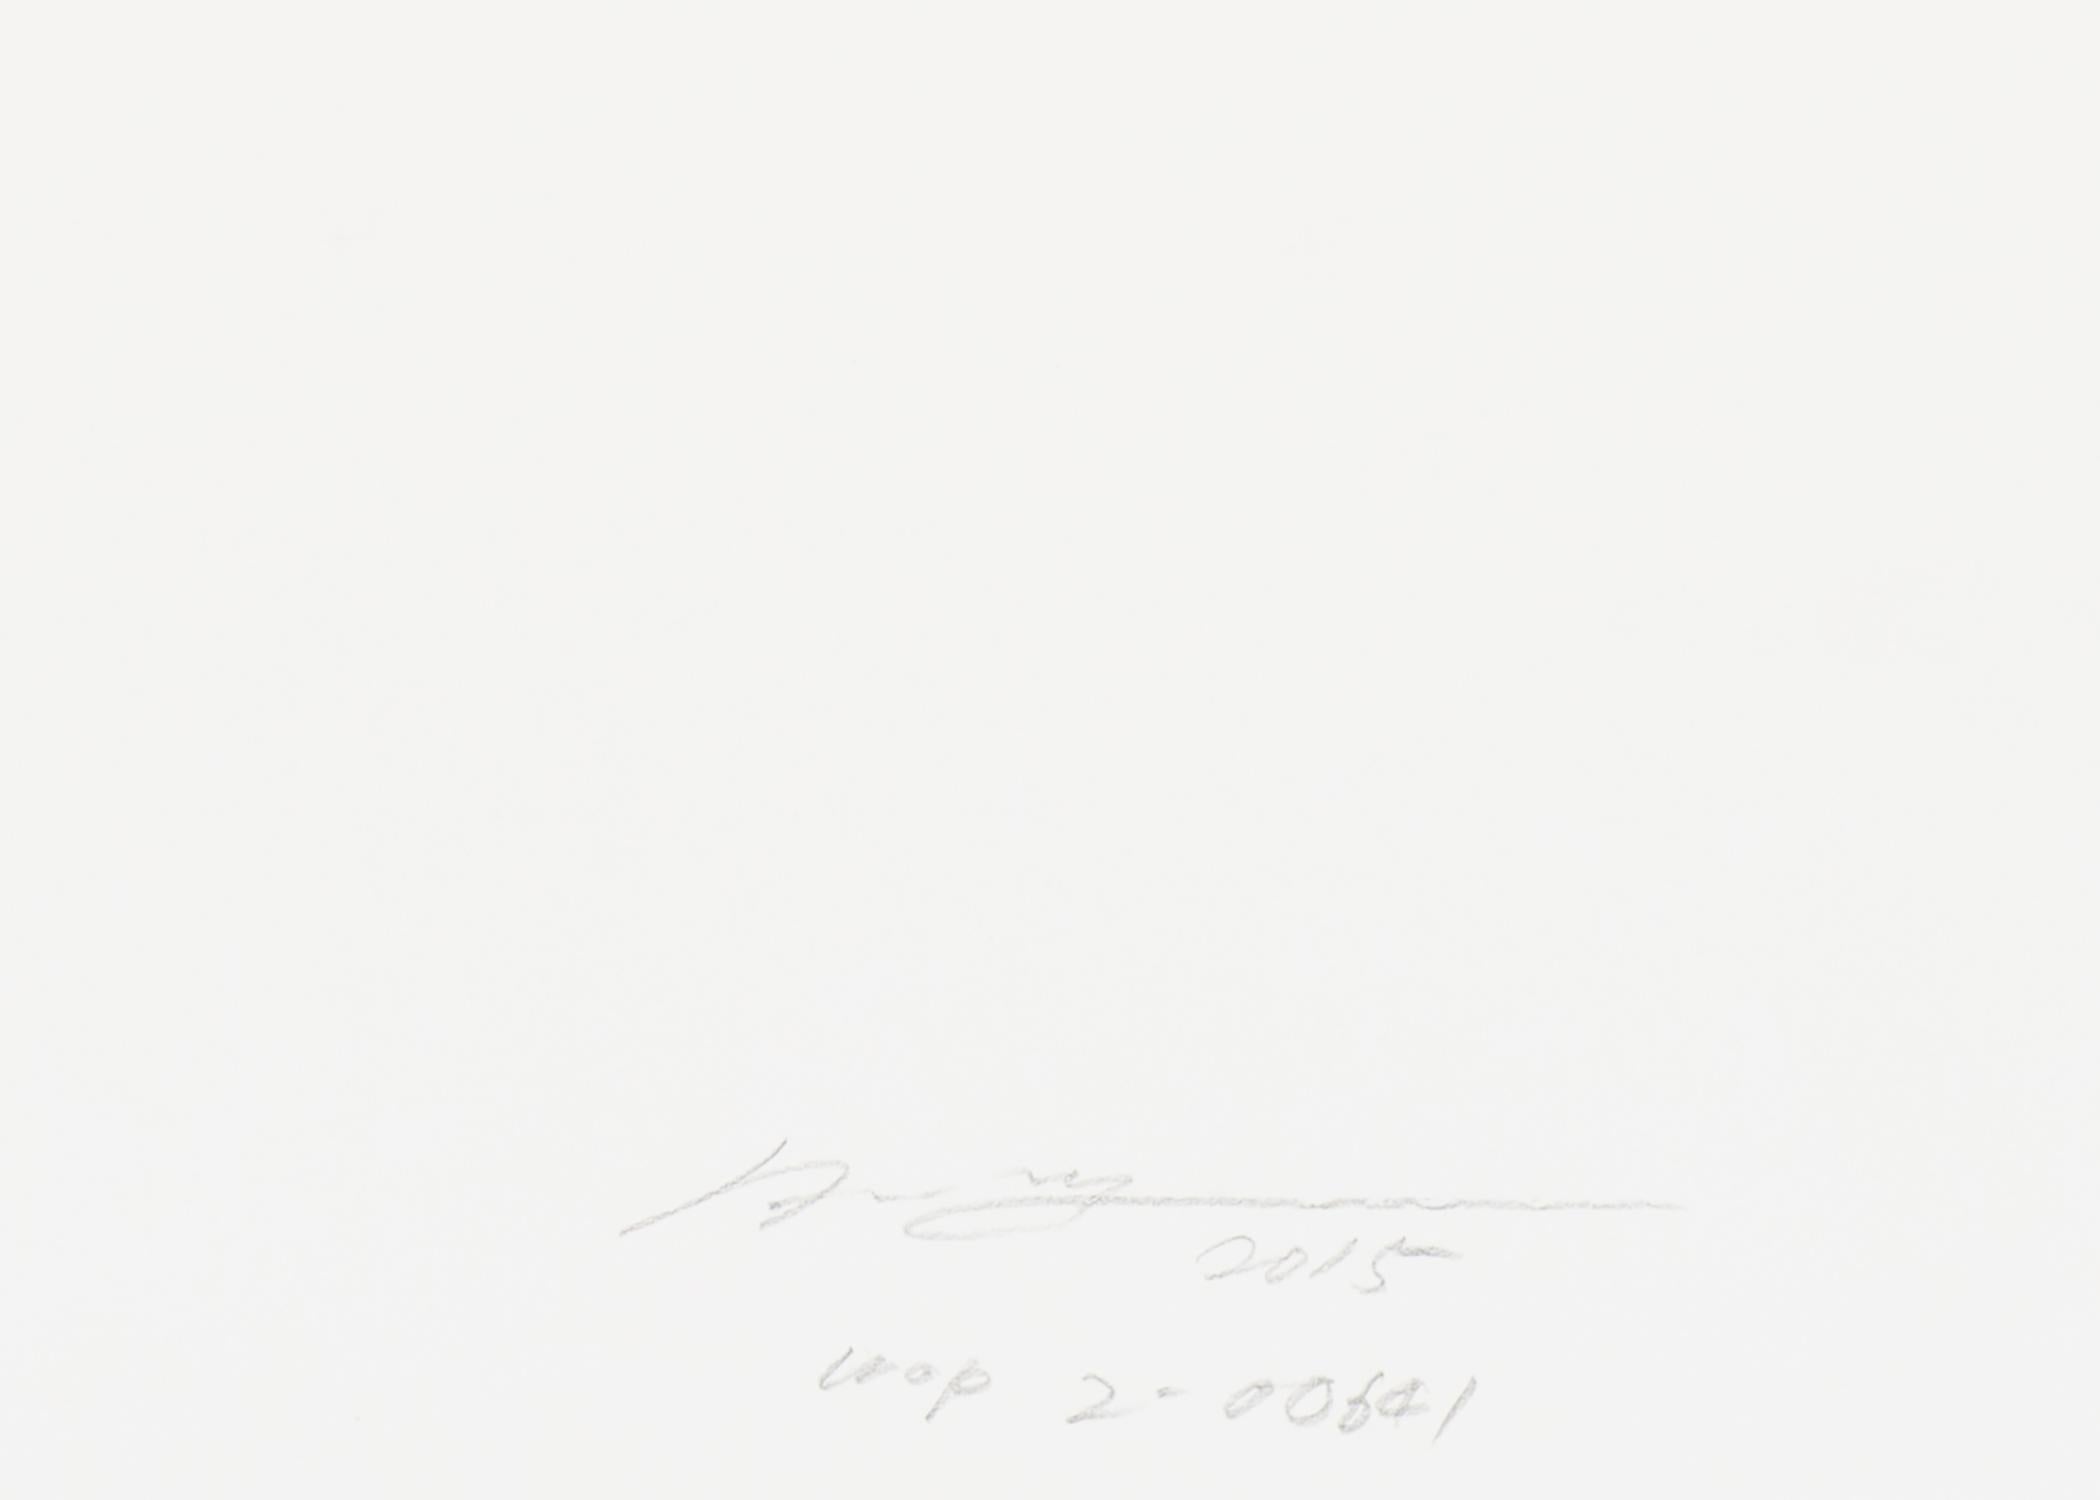 WOP 2 - 00641 - Romantic Painting by Hiro Yokose